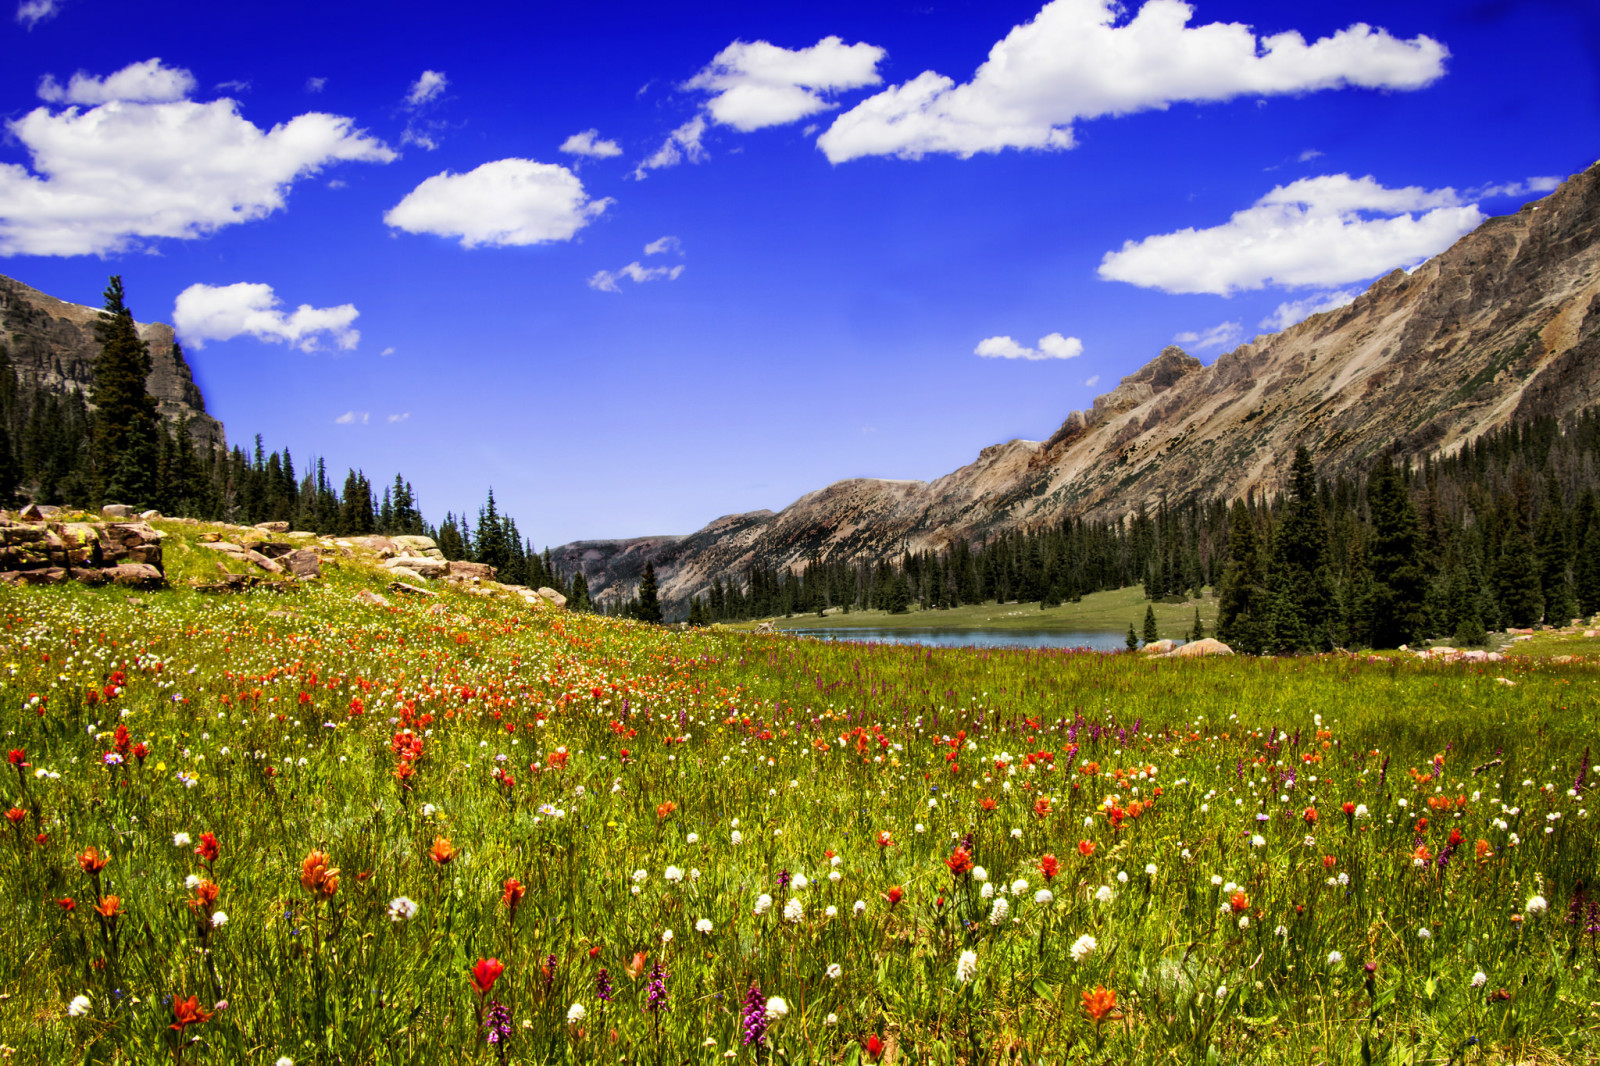 rumput, danau, bunga-bunga, awan, gunung, padang rumput